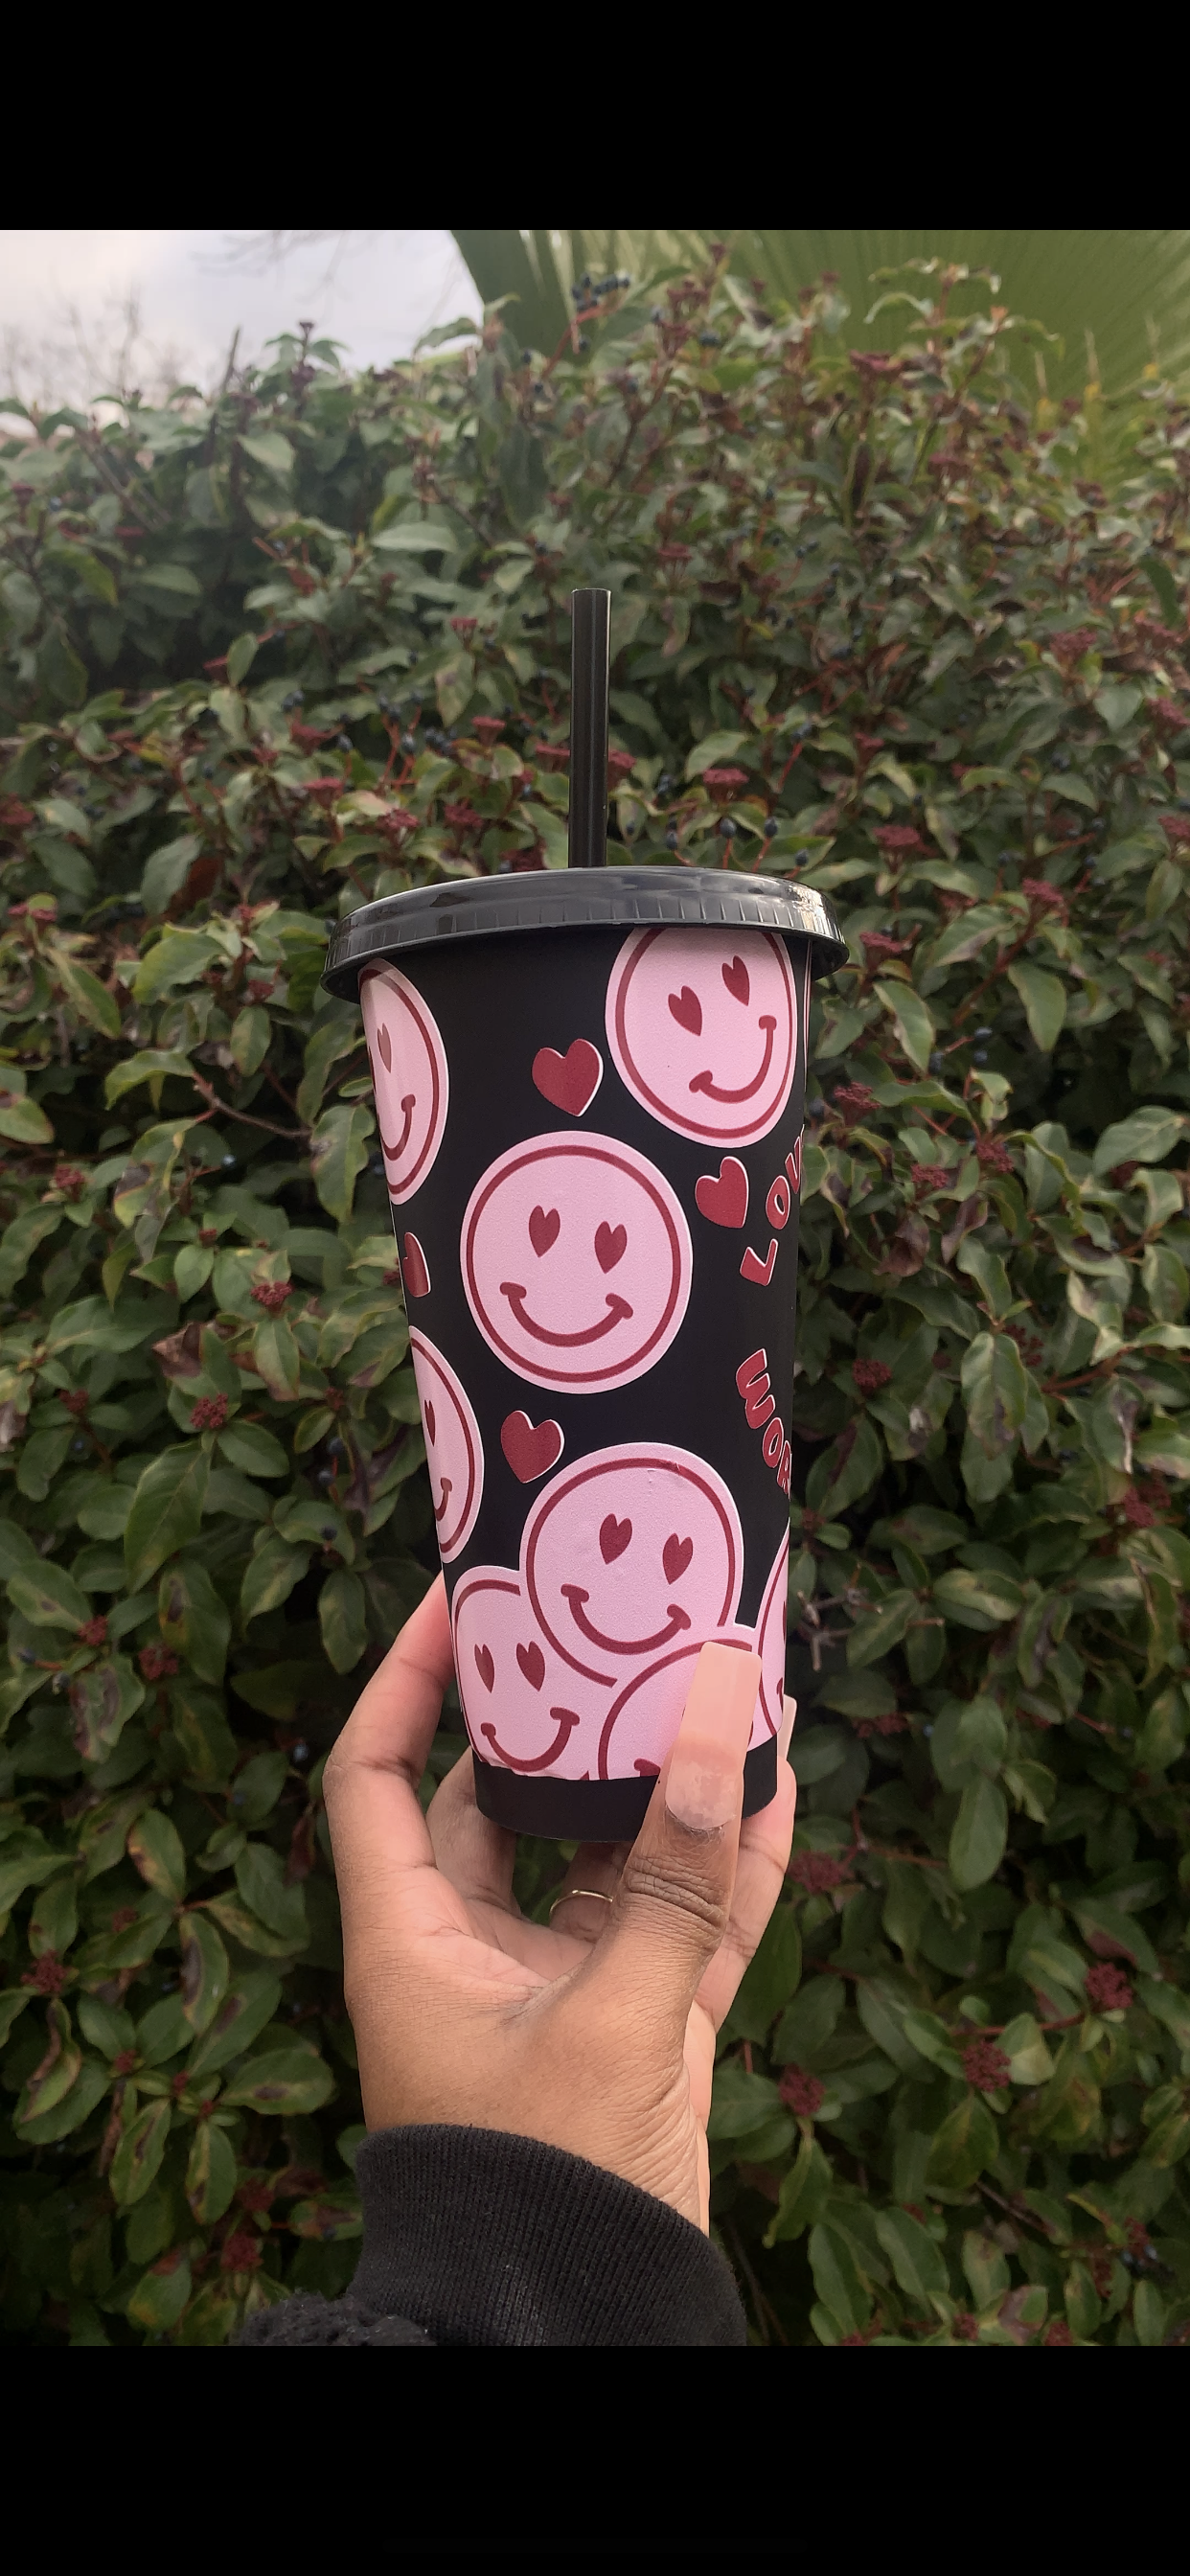 Reusable cups